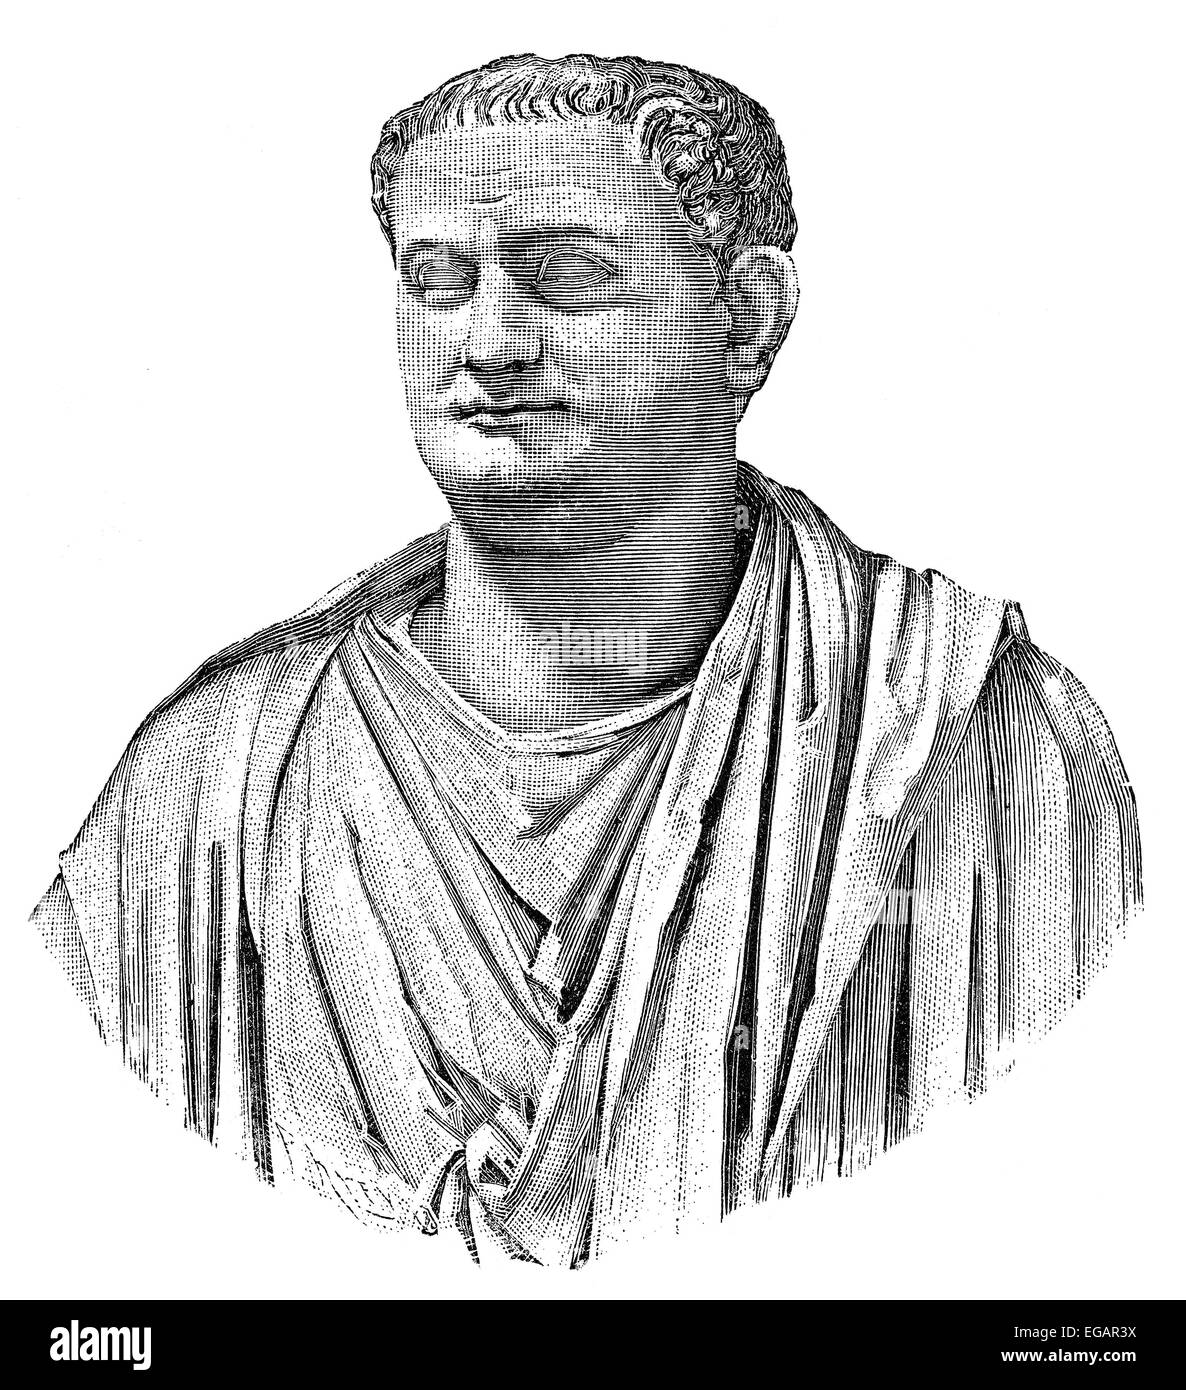 Titus oder Titus Flavius Caesar Vespasianus Augustus, 39-81, römischer Kaiser von 79 bis 81 Stockfoto